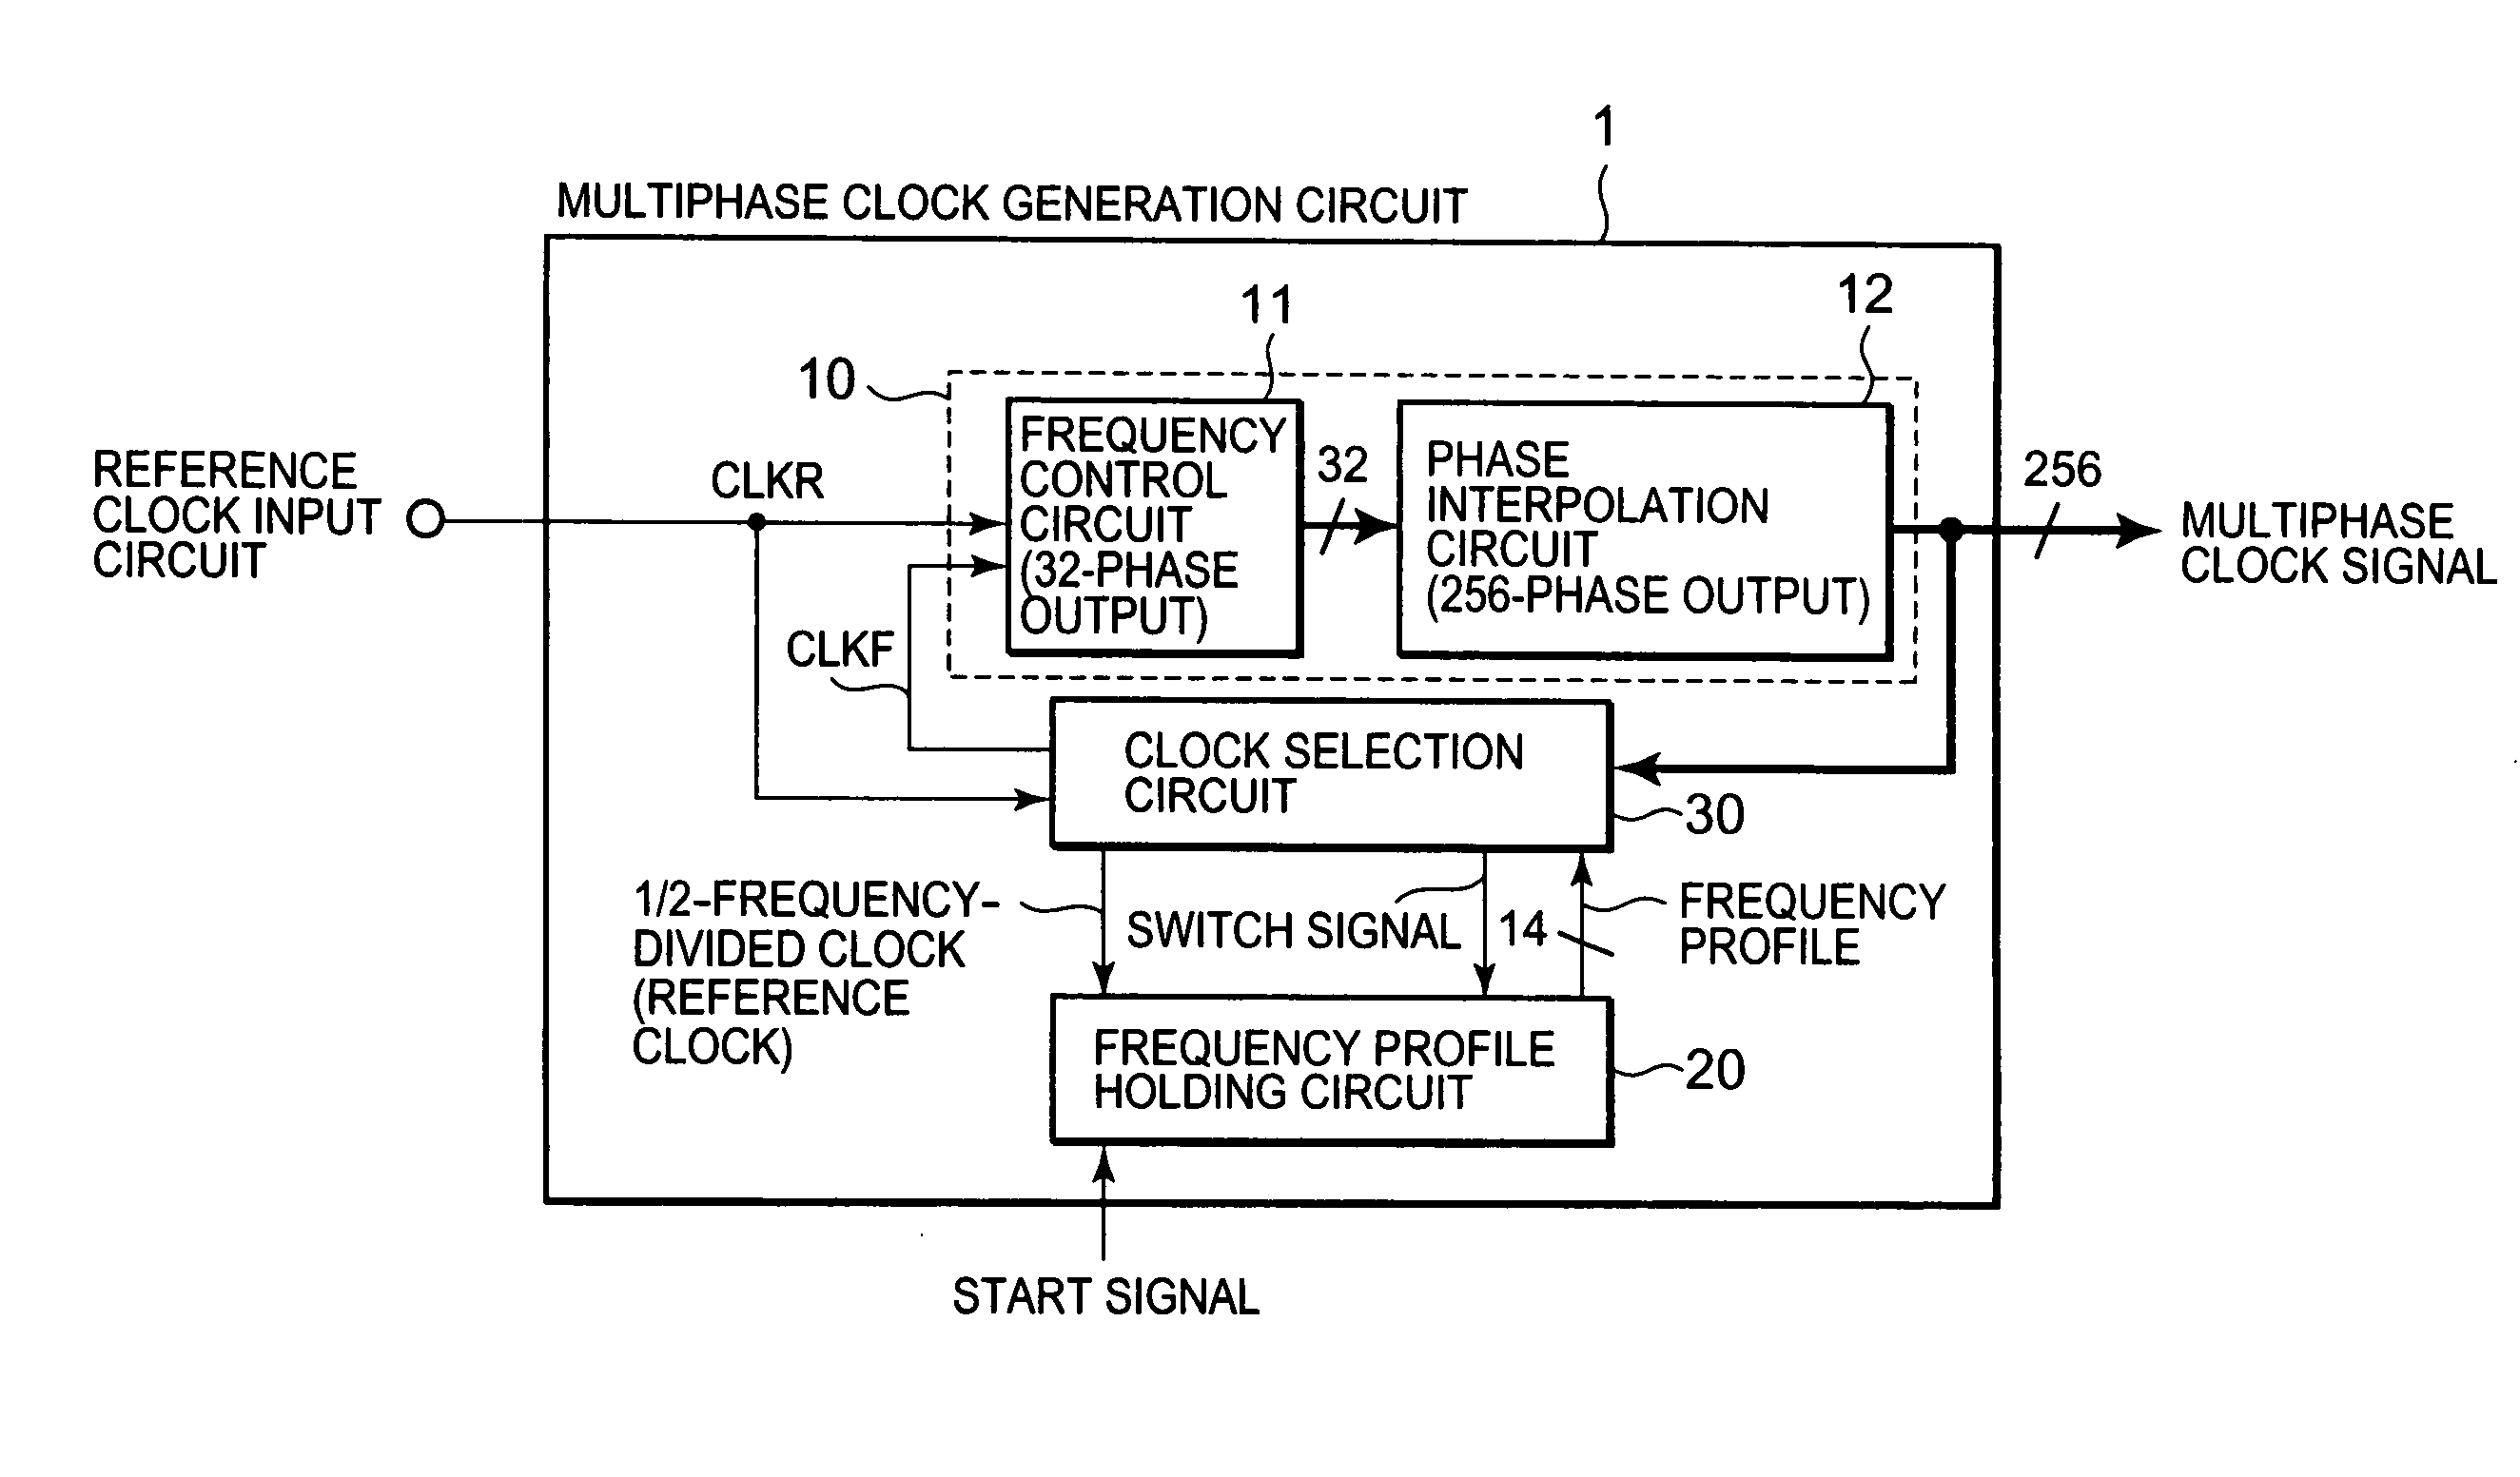 Multiphase clock generation circuit